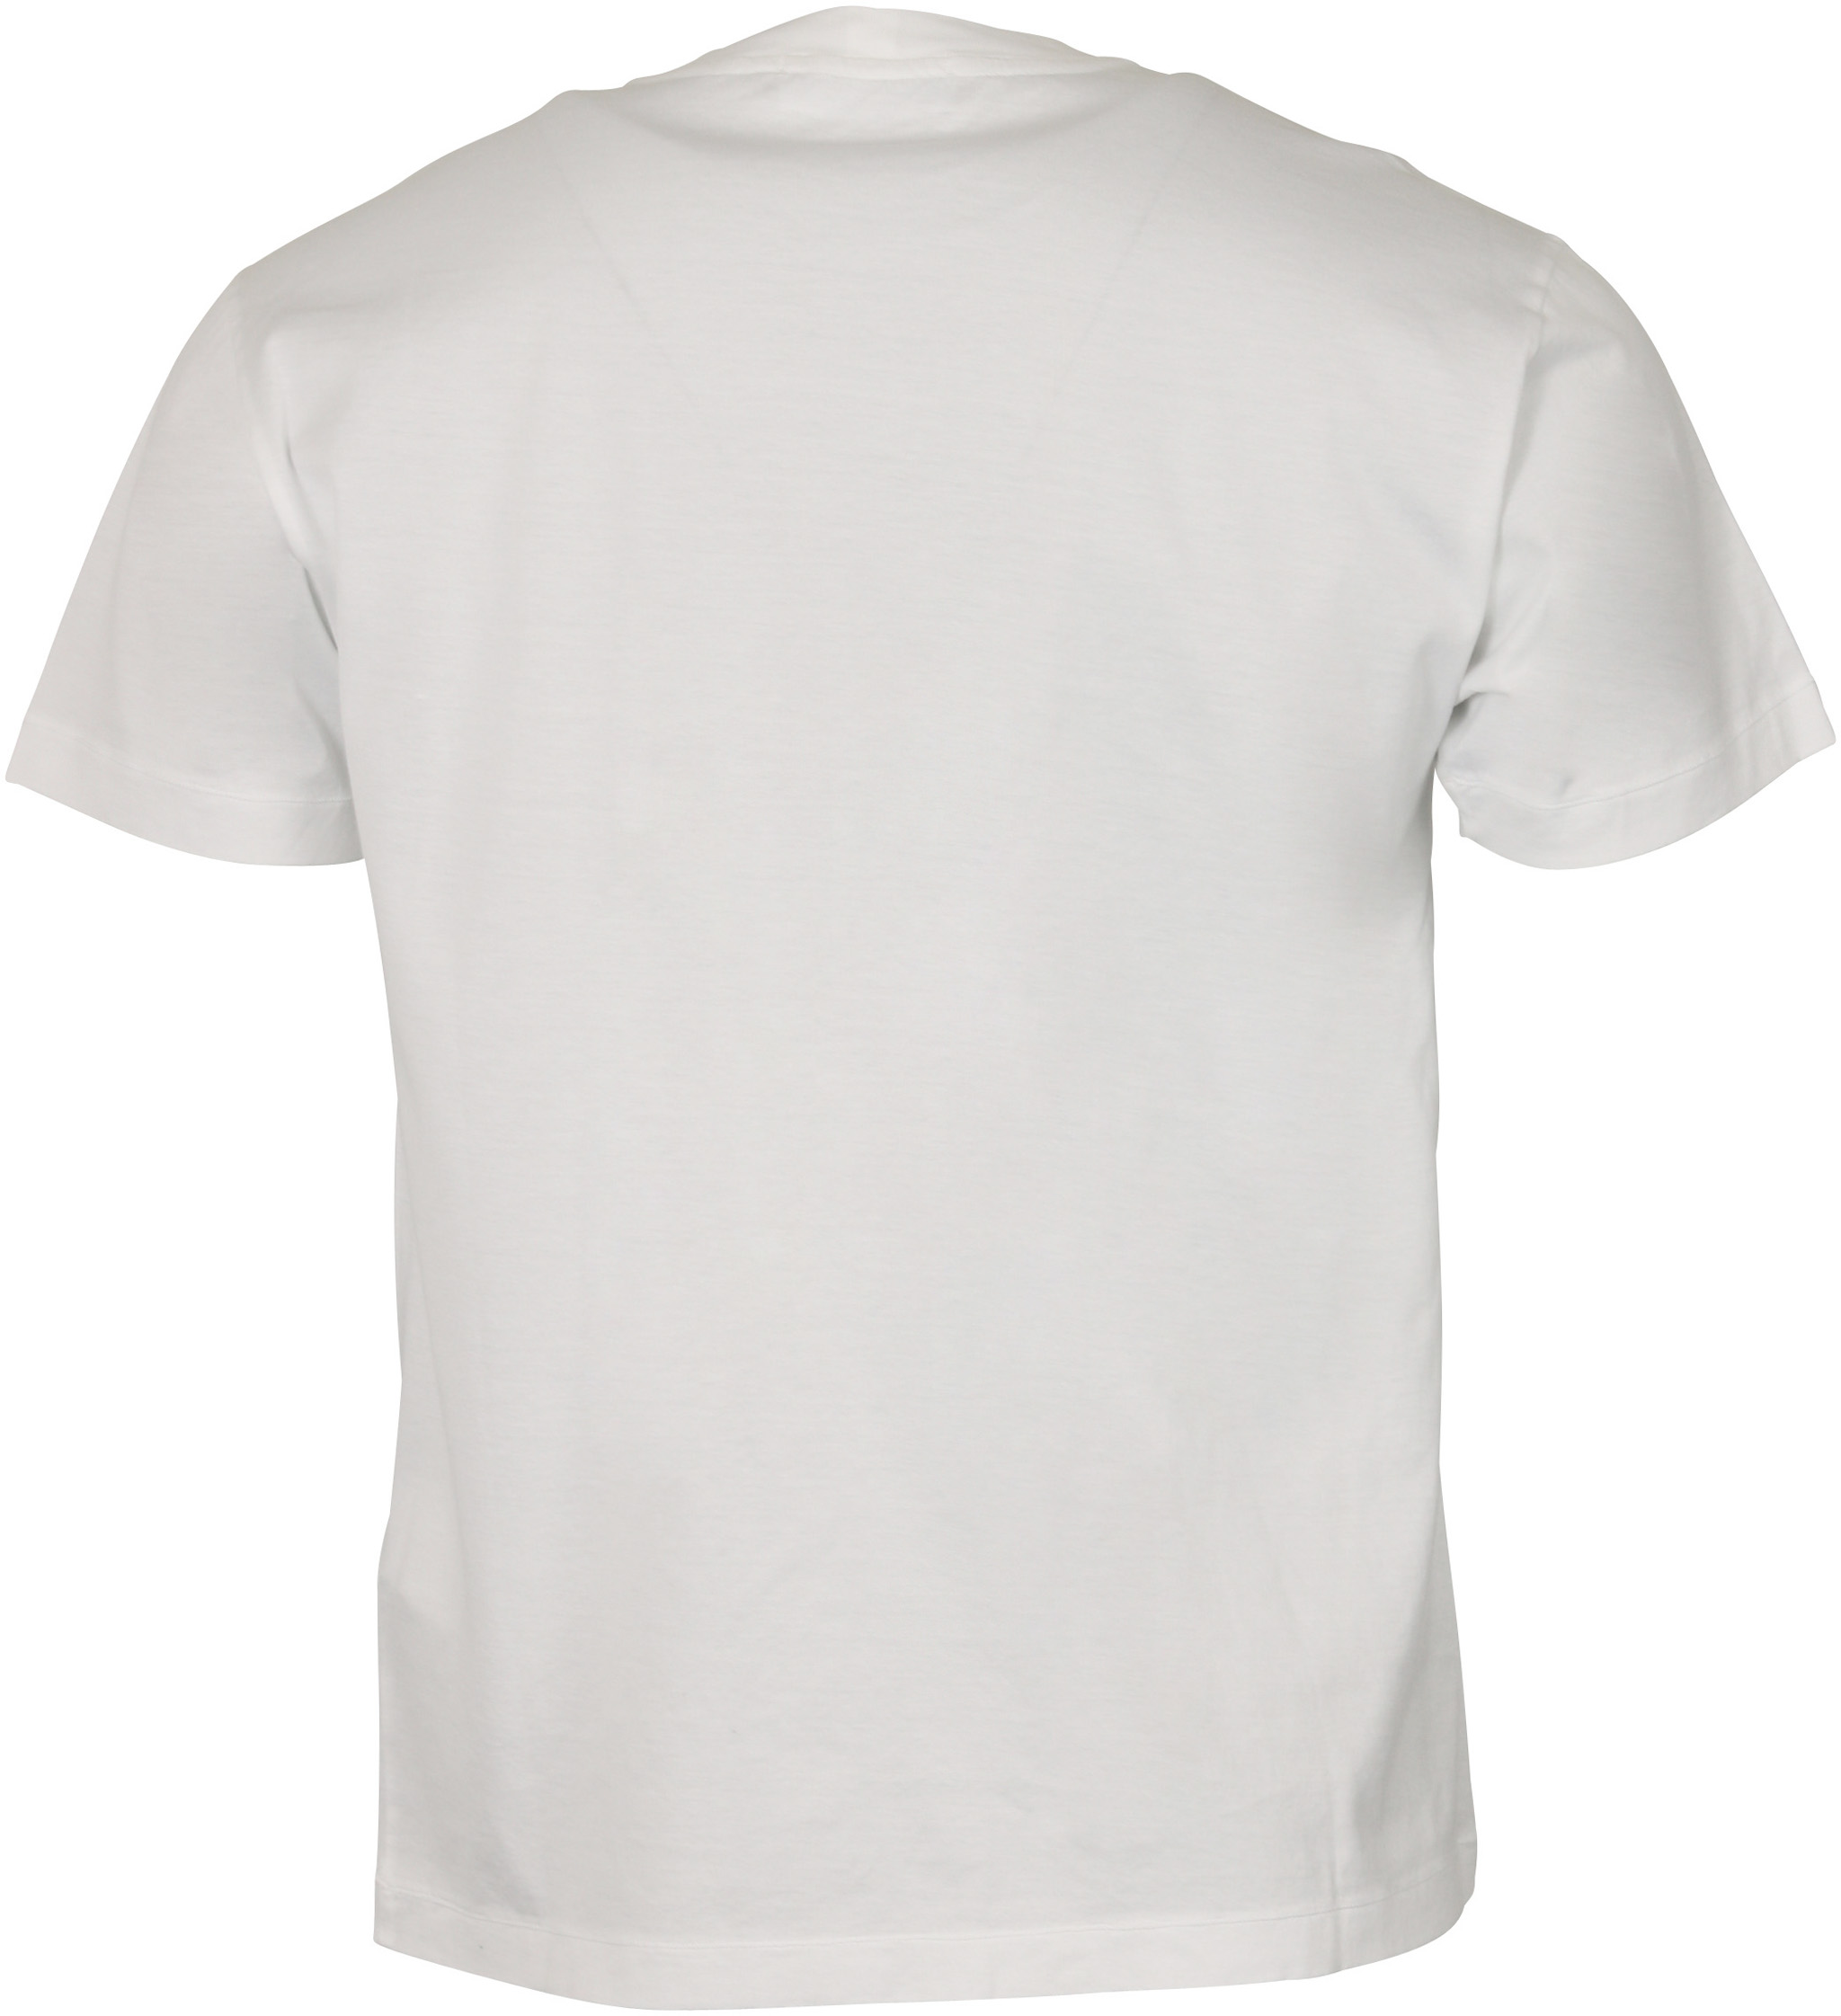 Stone Island T-Shirt White XXXL